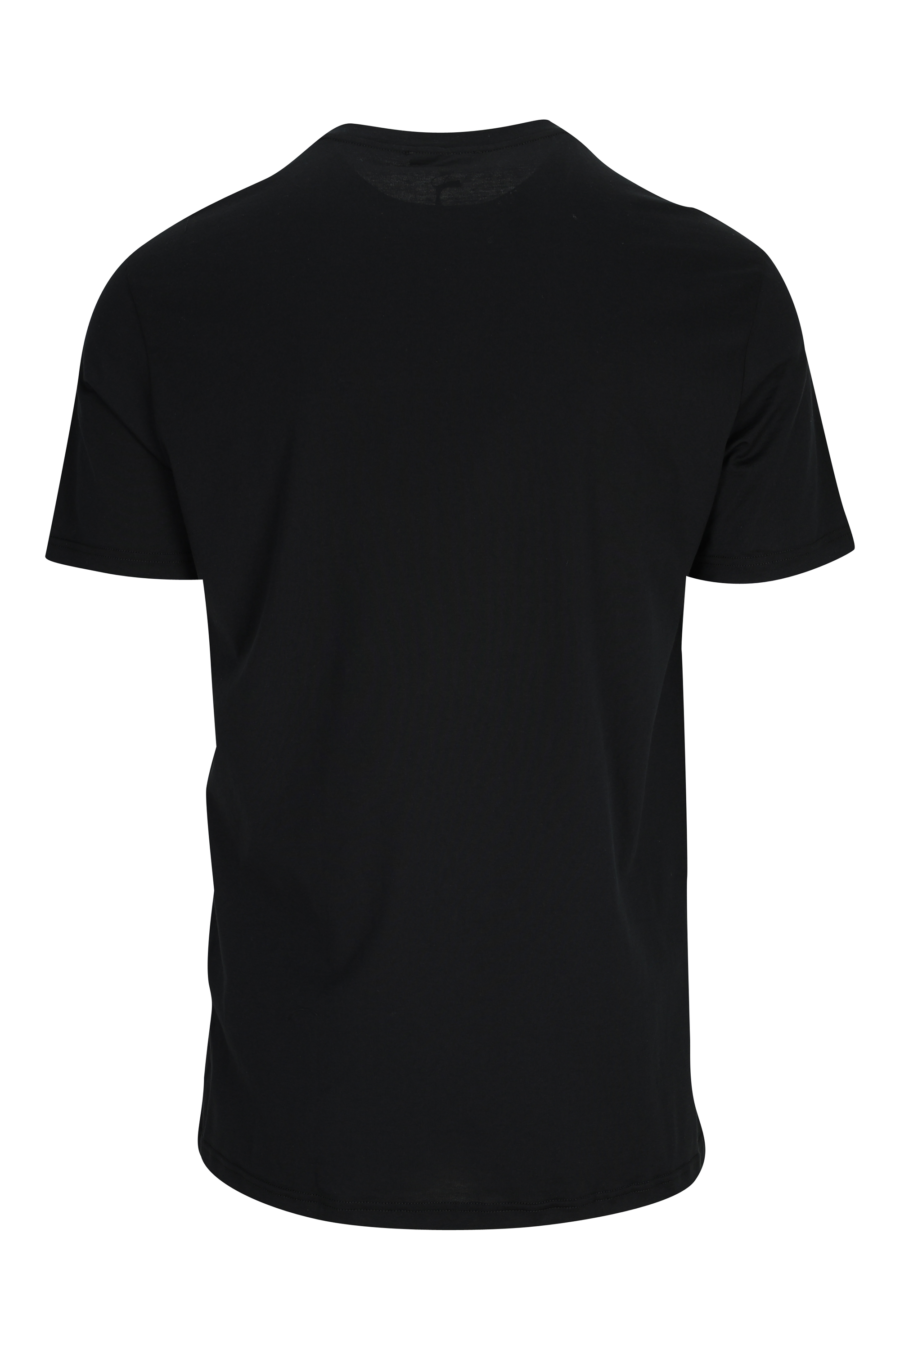 Camiseta negra con minilogo blanco "paris" - 8032674525055 1